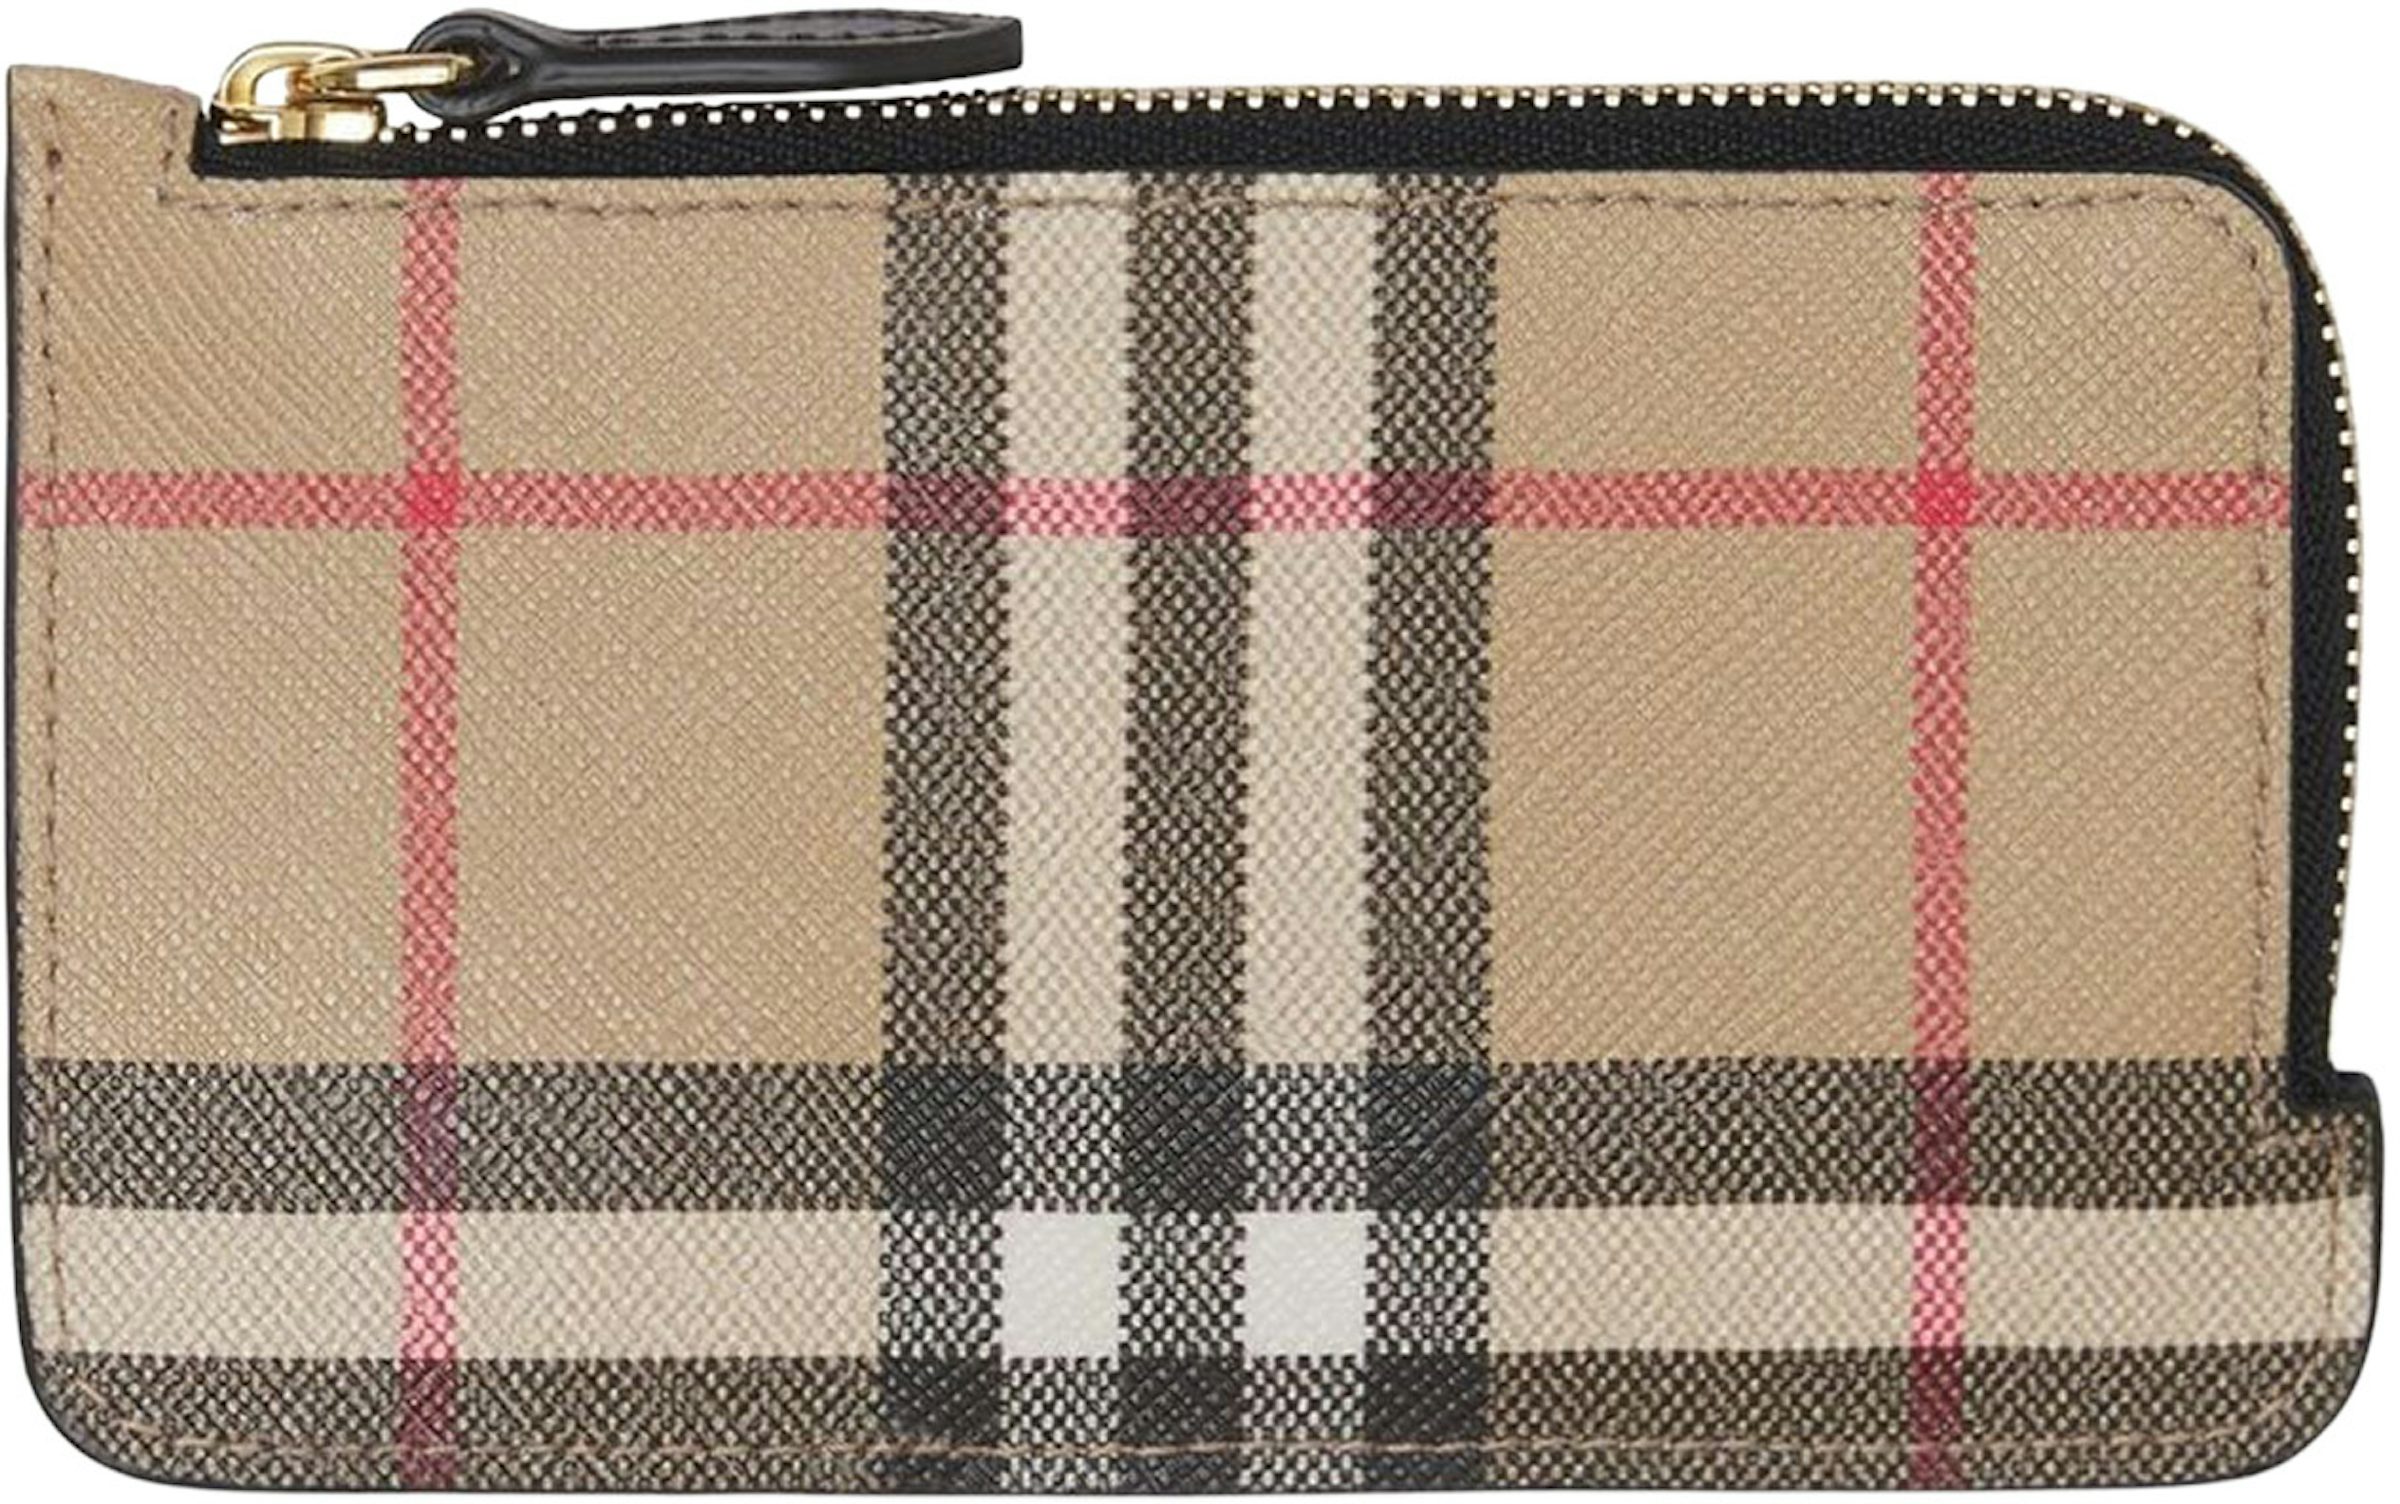 Vintage Burberry Check Zipper Wallet